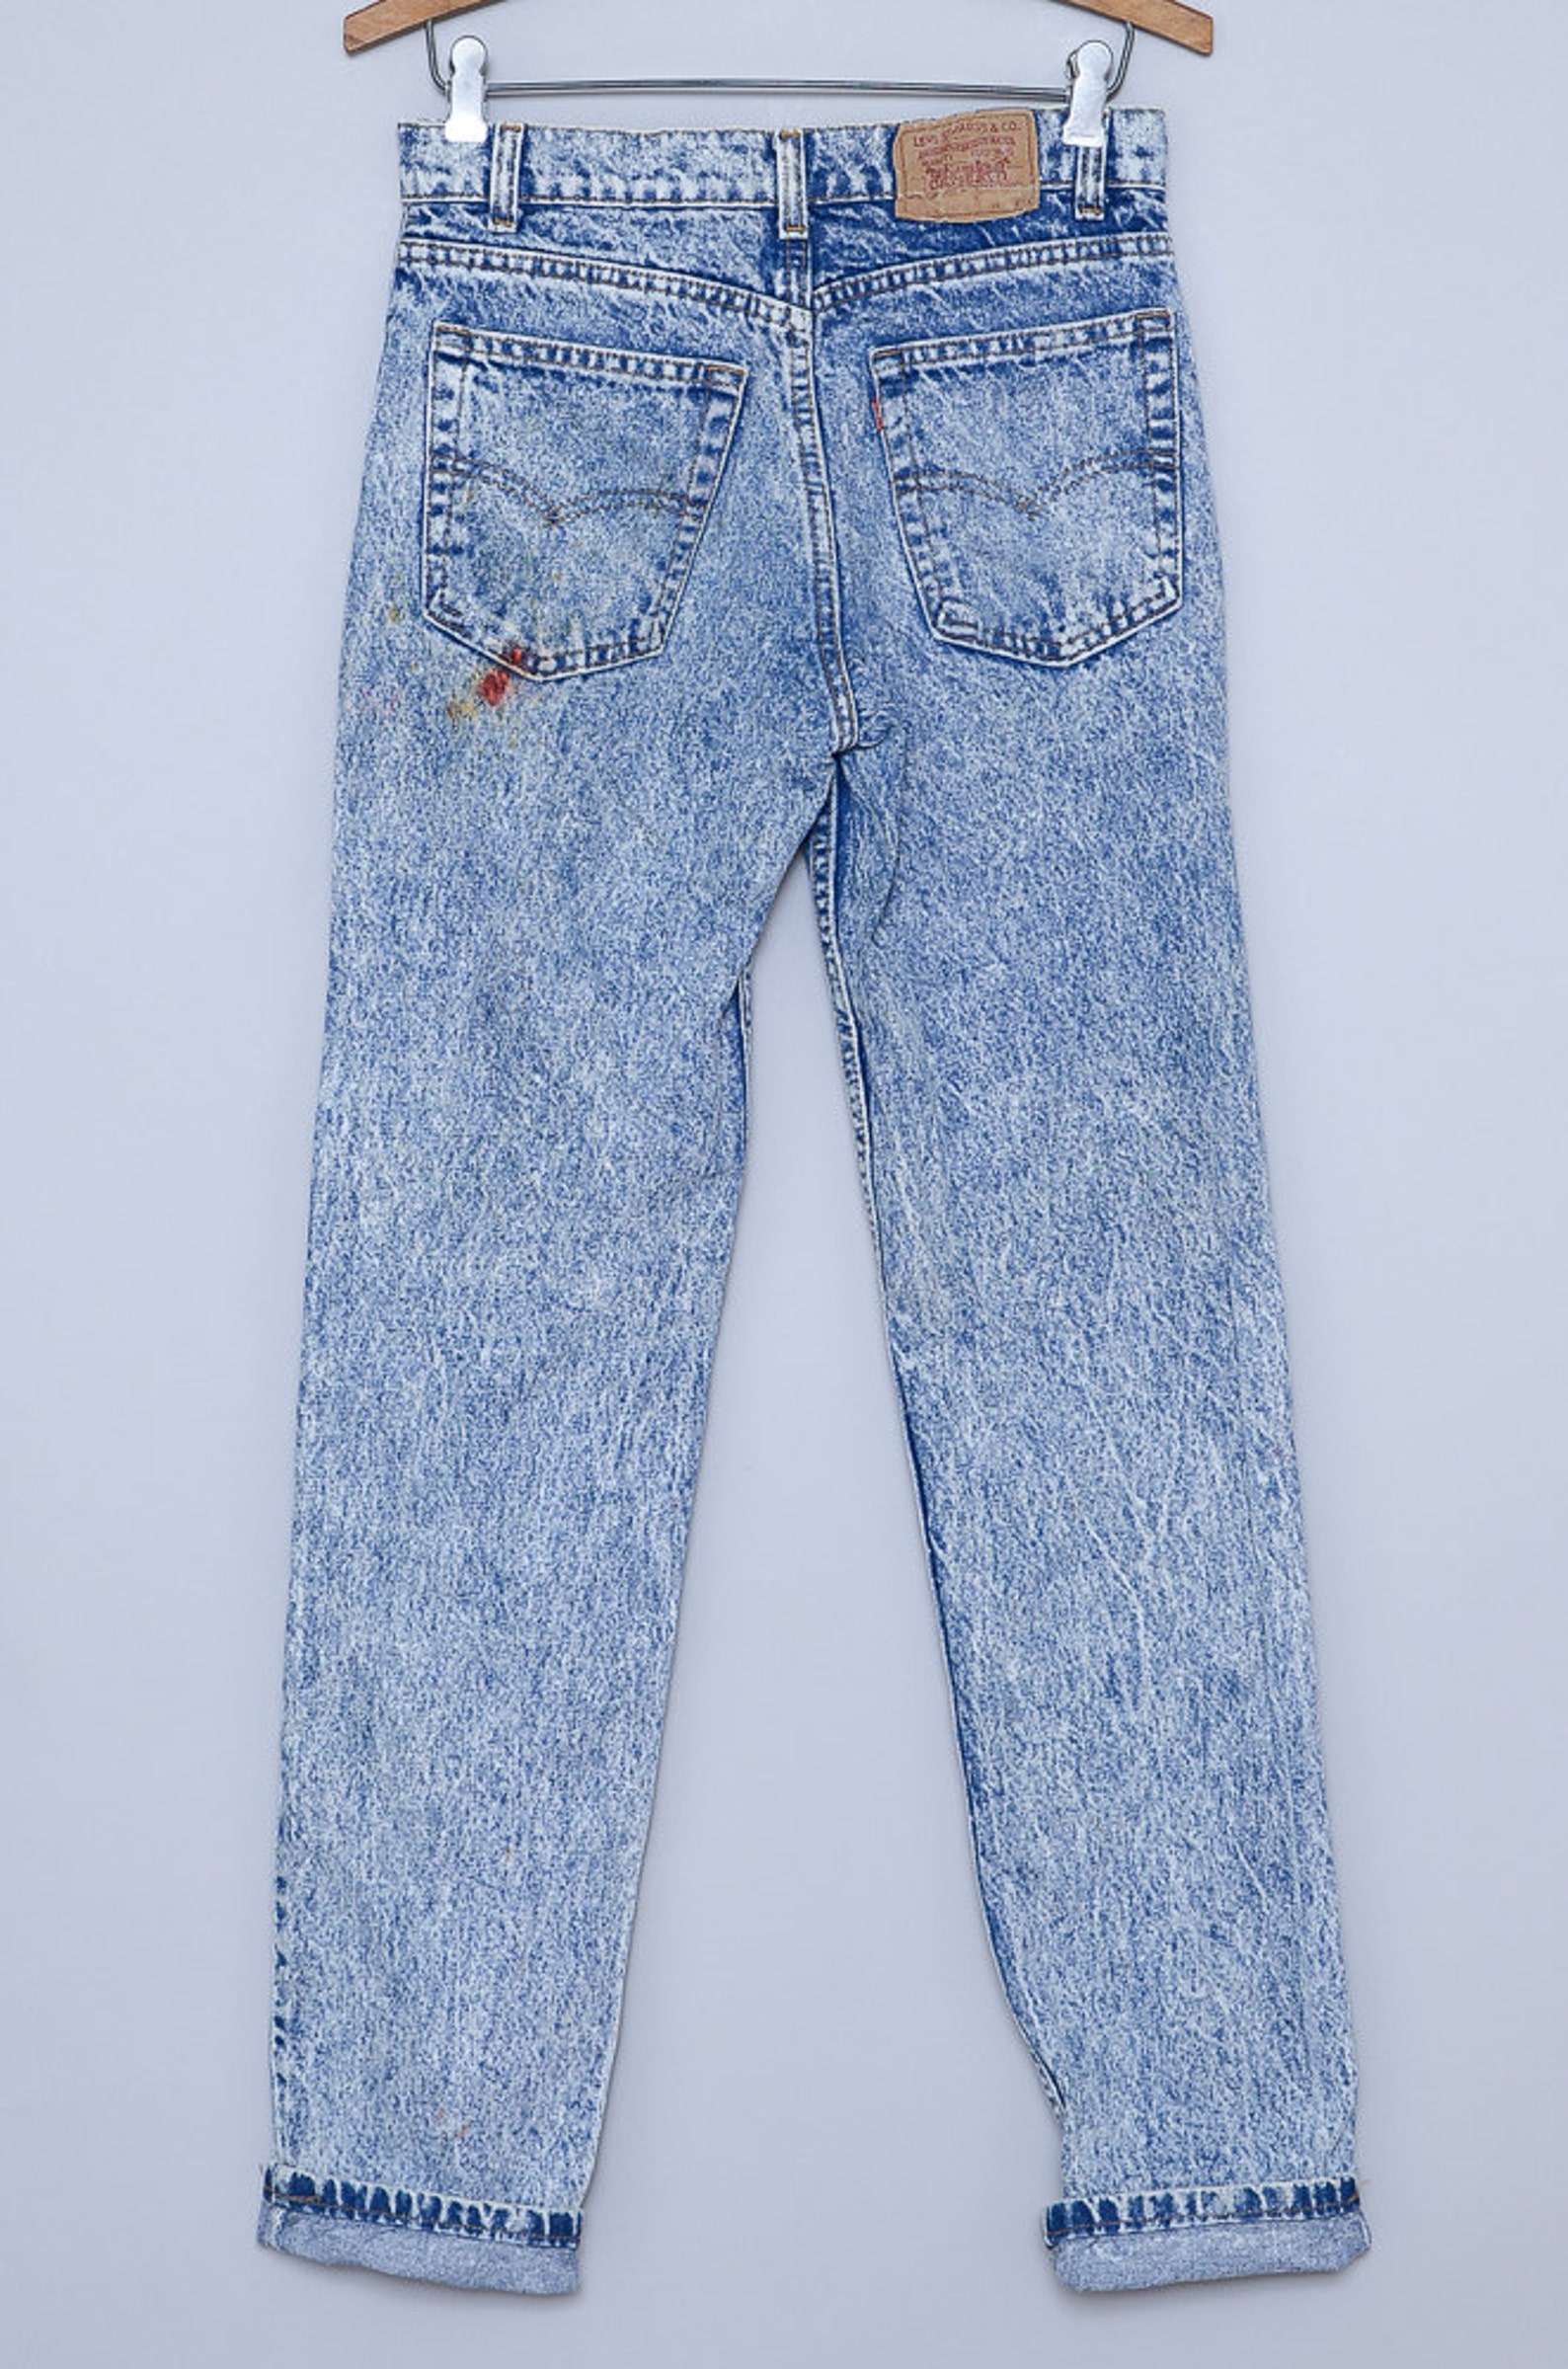 80s Levis Acid Washed Blue Denim High Waisted Jeans 29 X 33 | Etsy